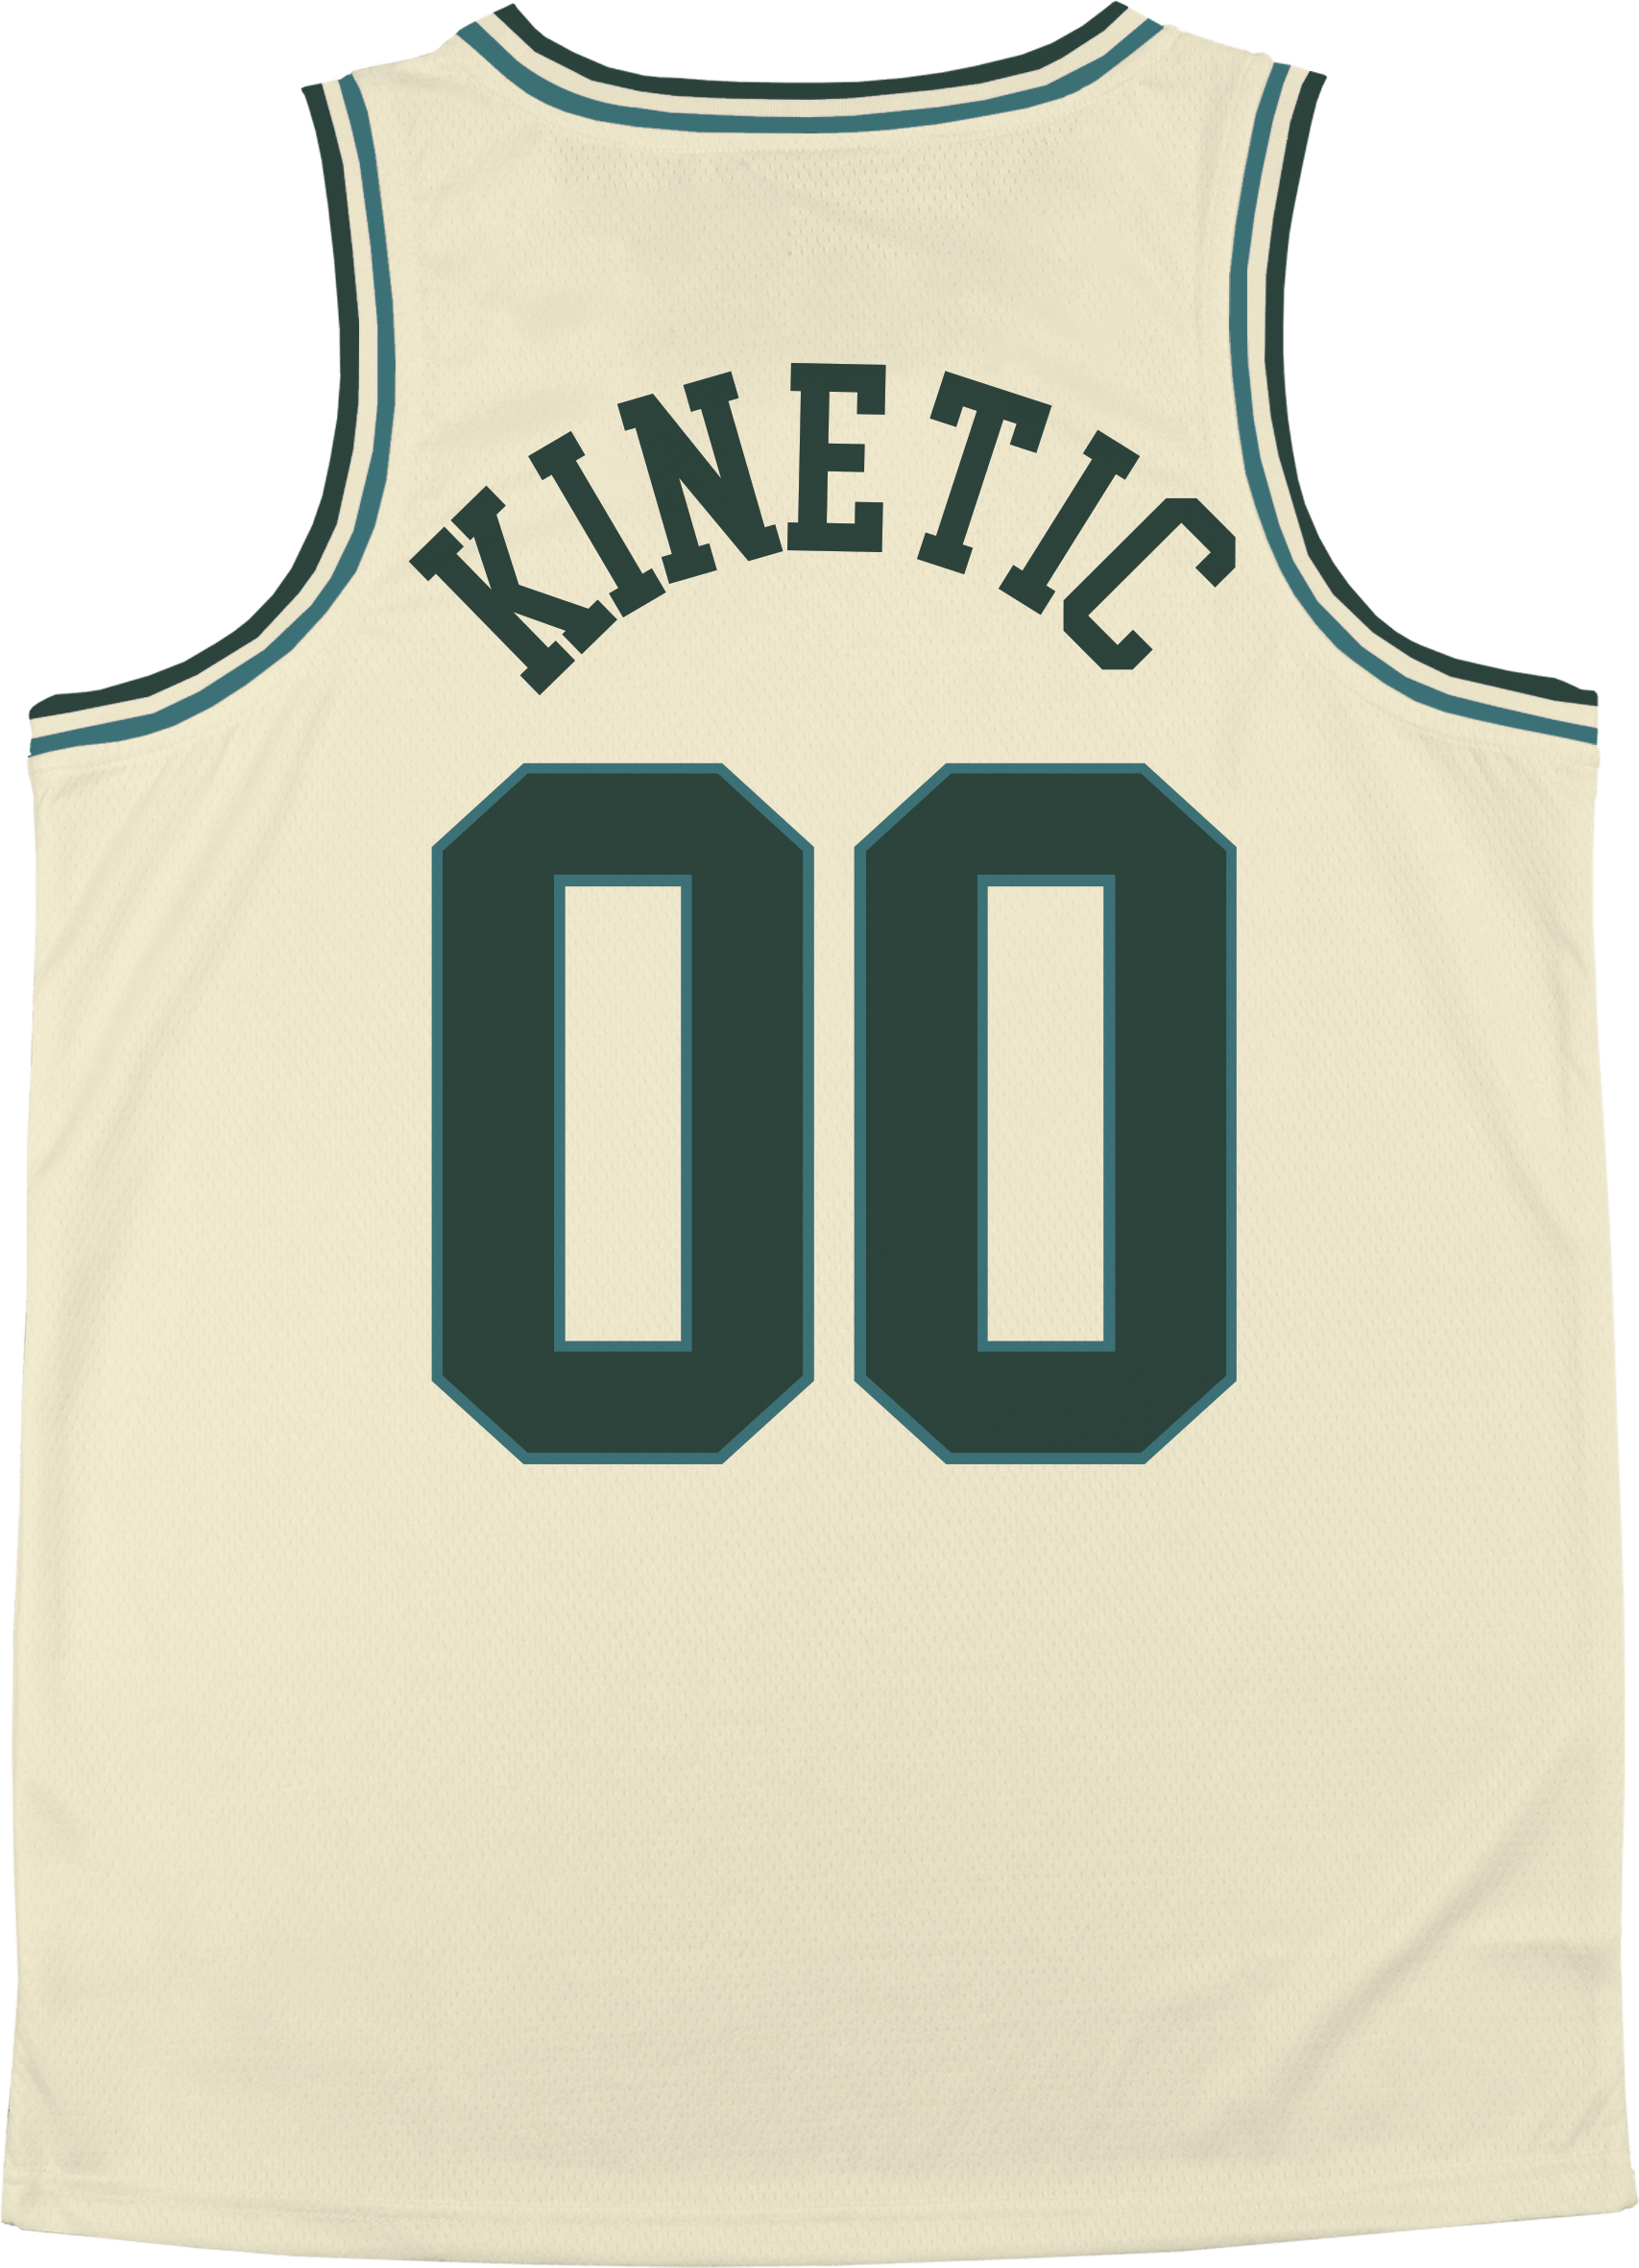 Kappa Alpha Theta - Buttercream Basketball Jersey - Kinetic Society